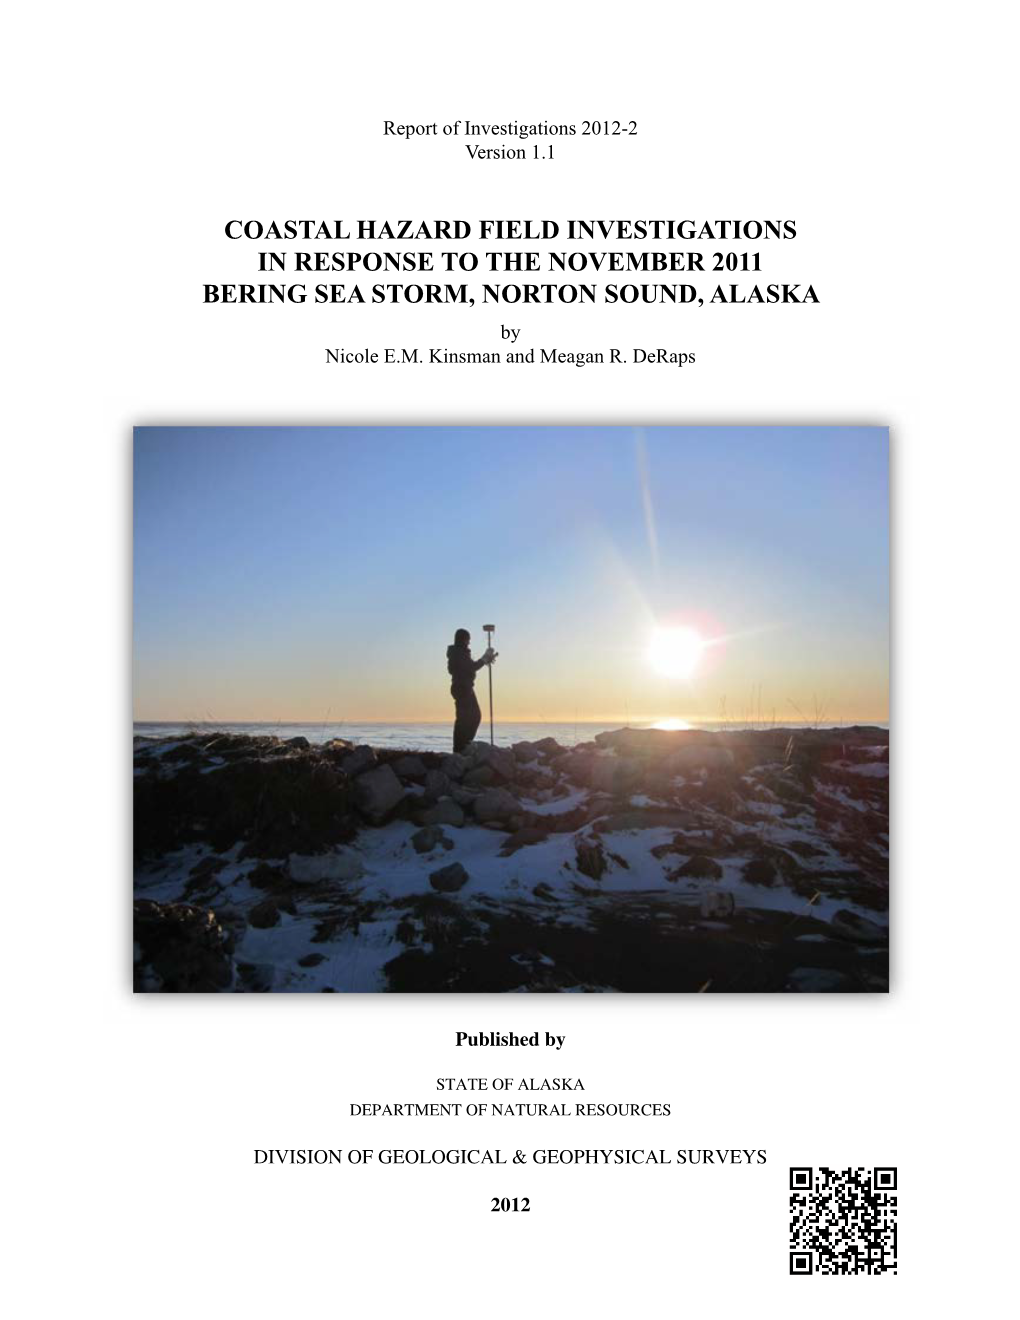 COASTAL HAZARD FIELD INVESTIGATIONS in RESPONSE to the NOVEMBER 2011 BERING SEA STORM, NORTON SOUND, ALASKA by Nicole E.M